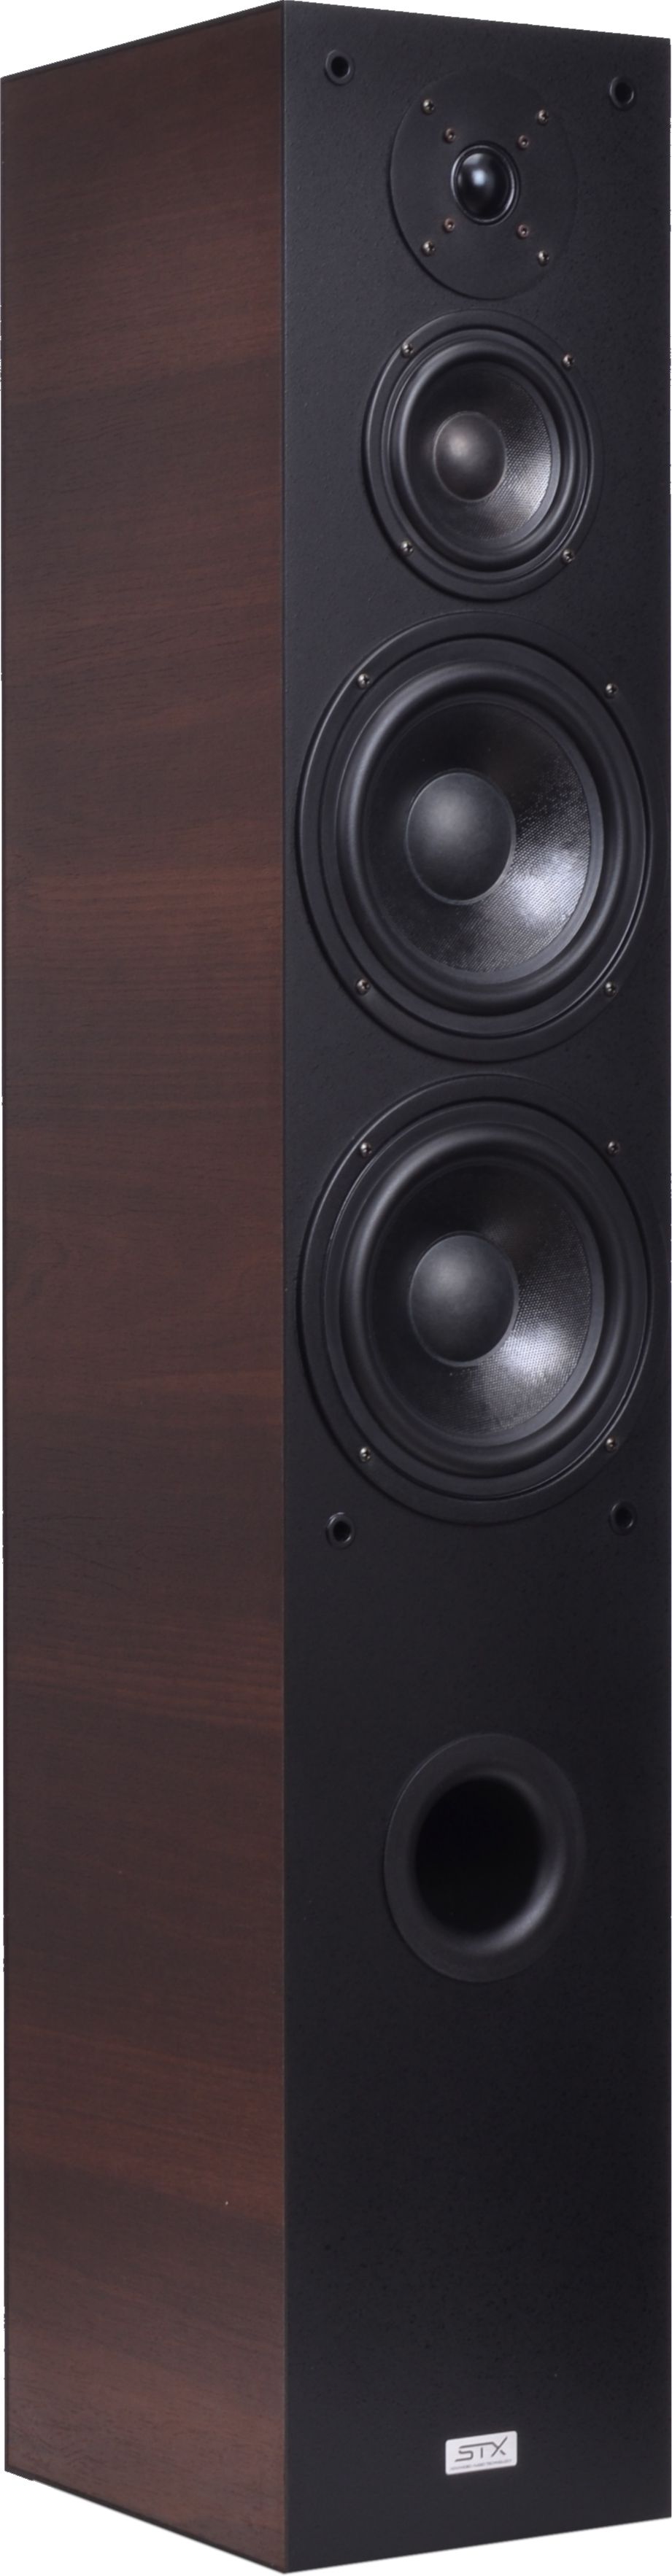 STX Graviton 300 speakers